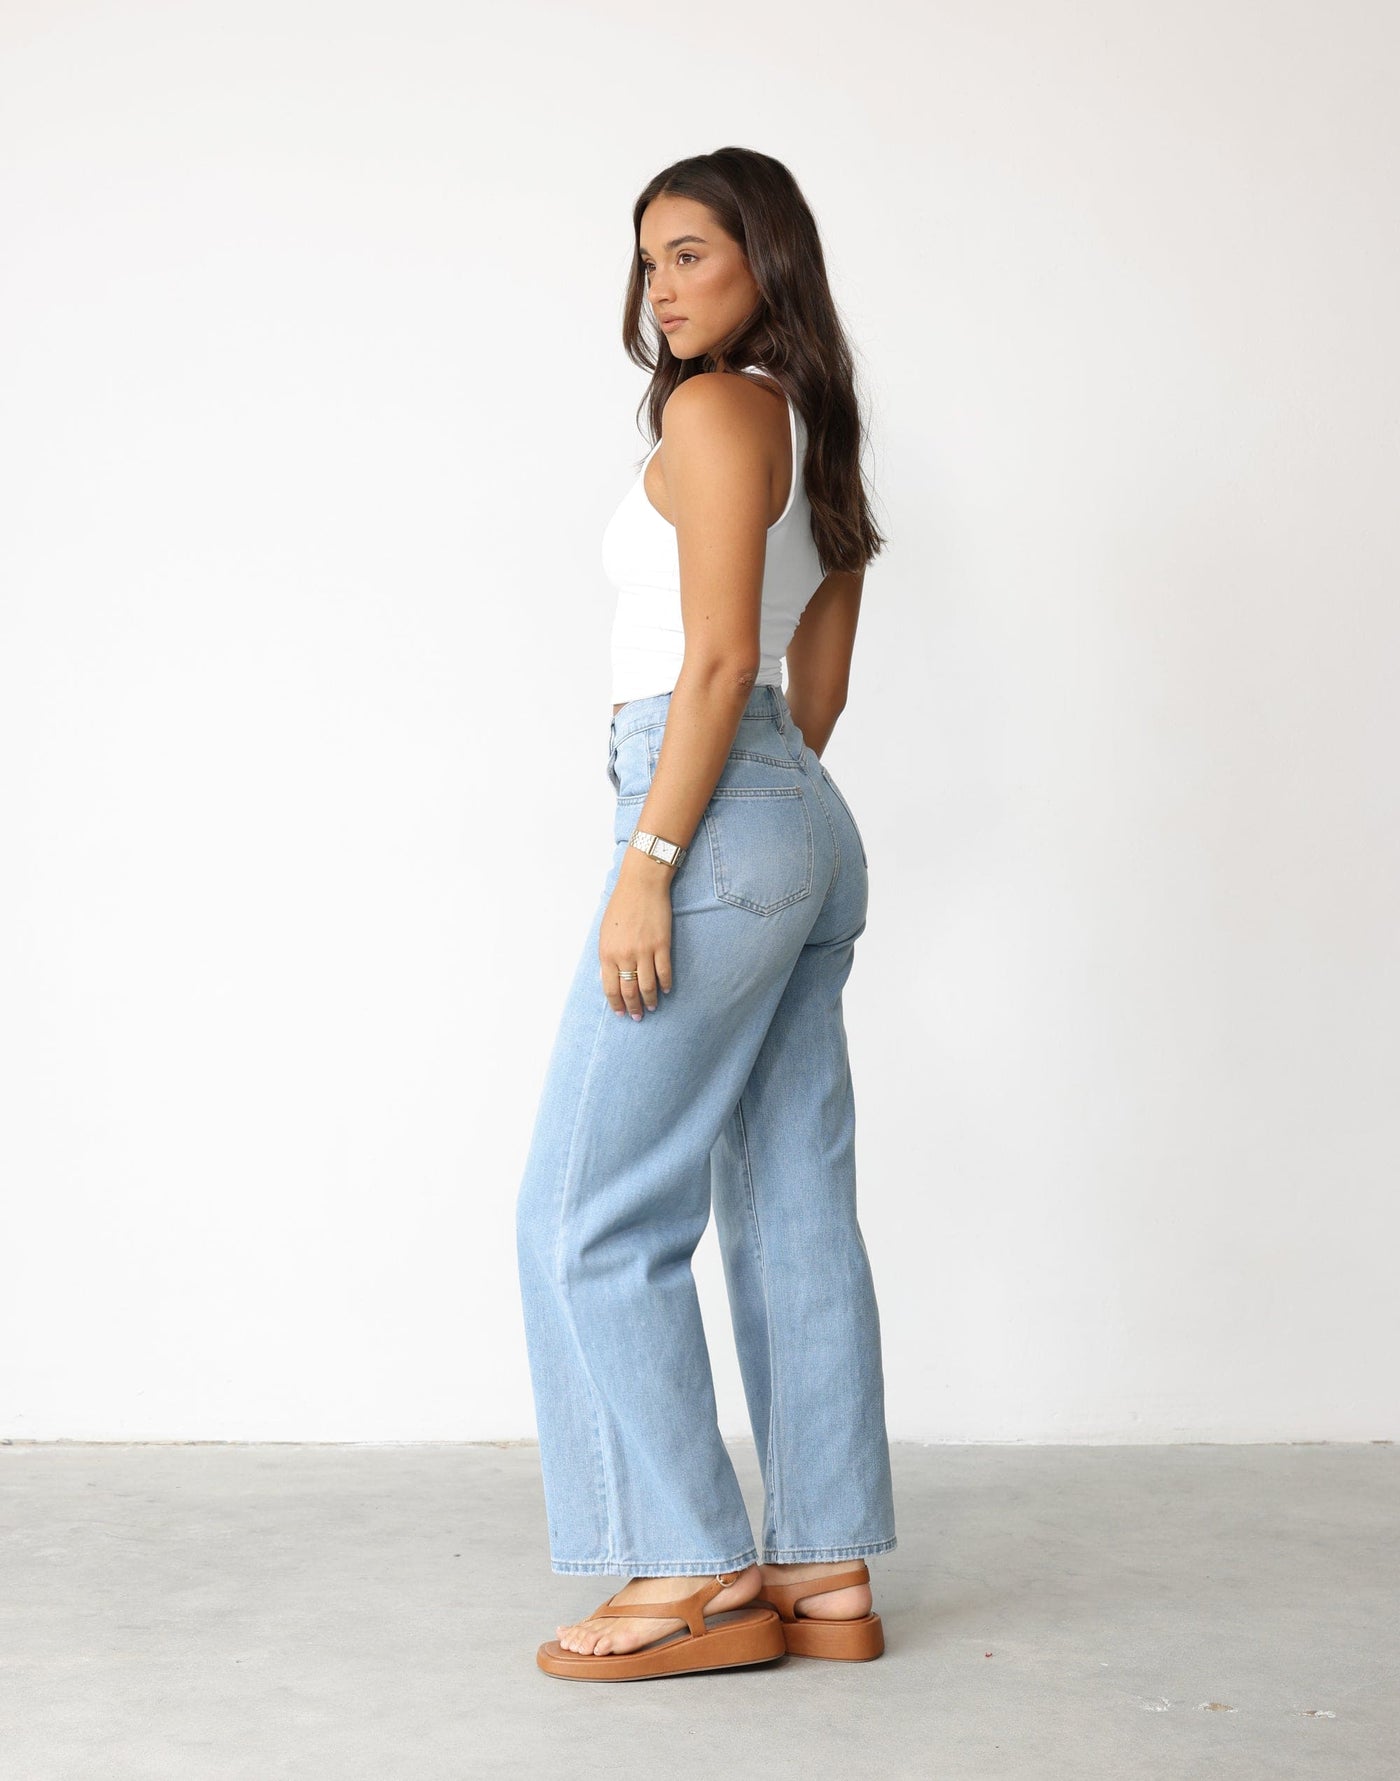 Tinah Jeans (Light Wash) - Mid Rise Wide Leg Jeans - Women's Pants - Charcoal Clothing